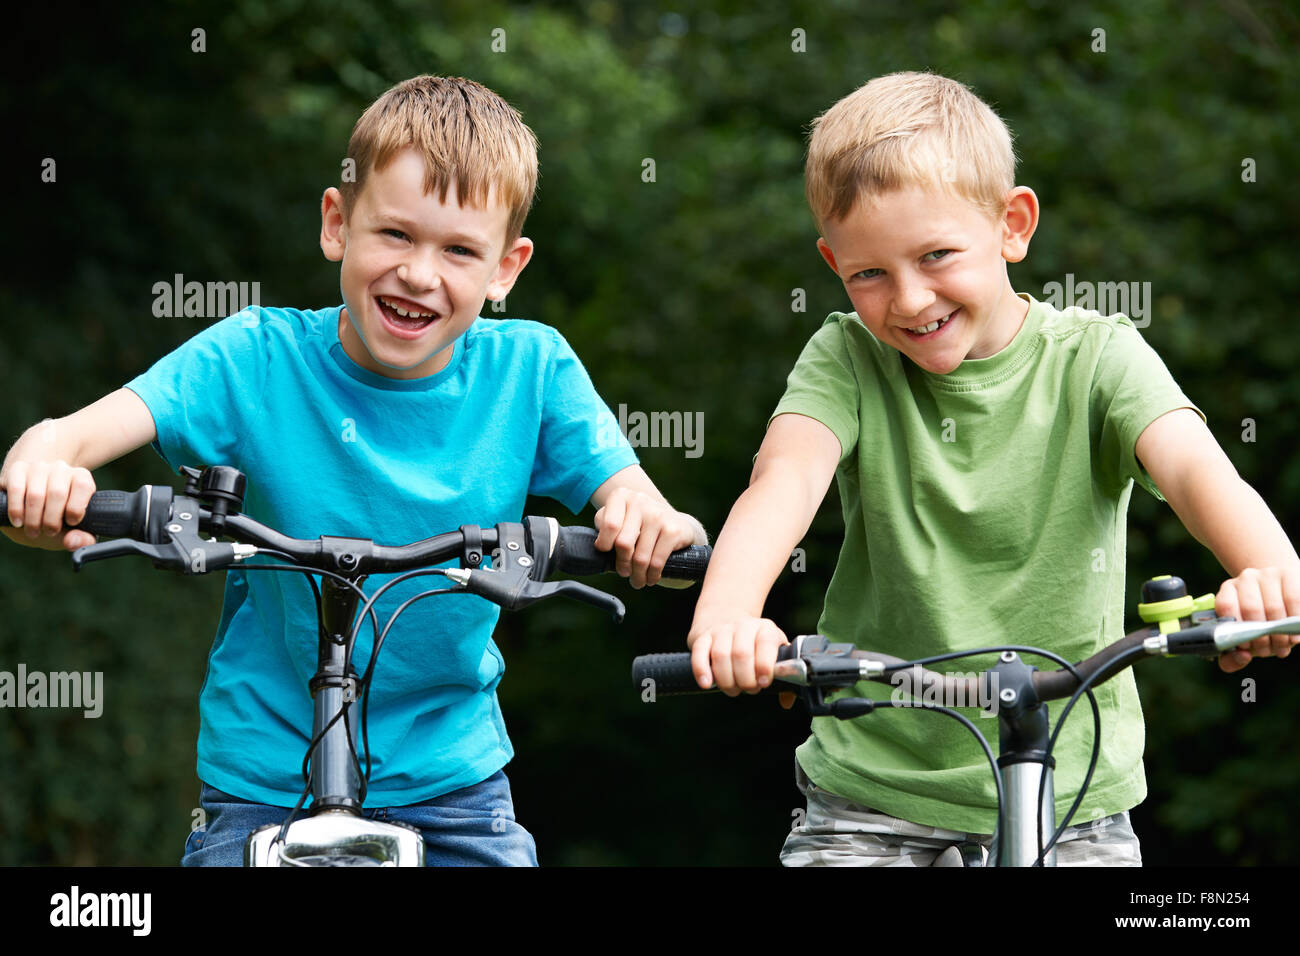 Two Boys Riding Bikes Together Stock Photo